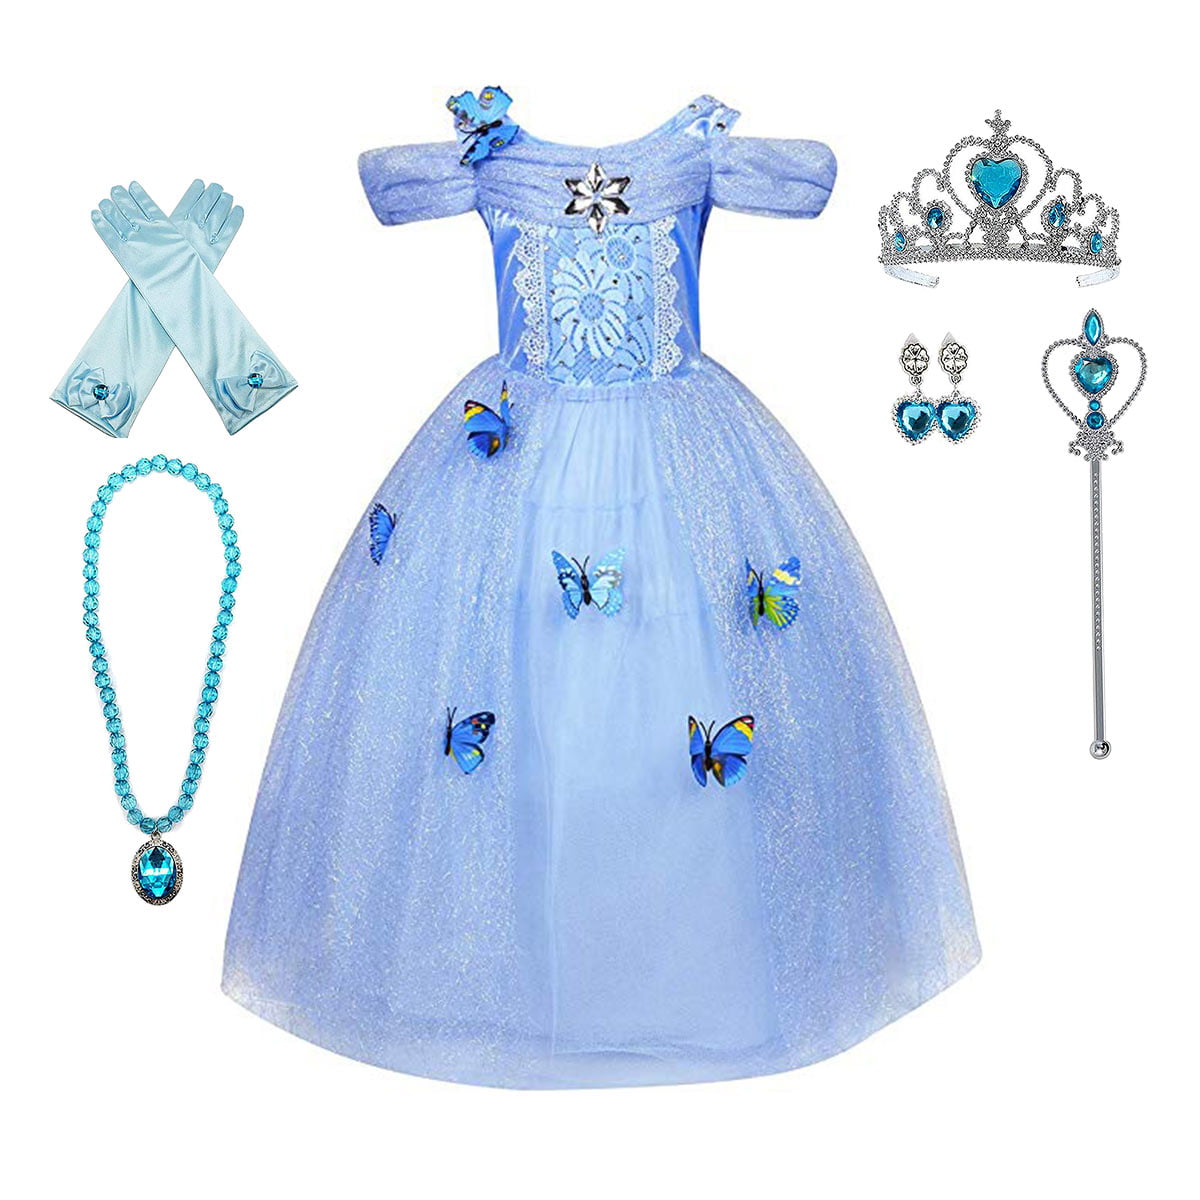 Sandy Princess Cinderella Cosplay Costume Kids Girls Party Fancy Dress Gown 3-9Y